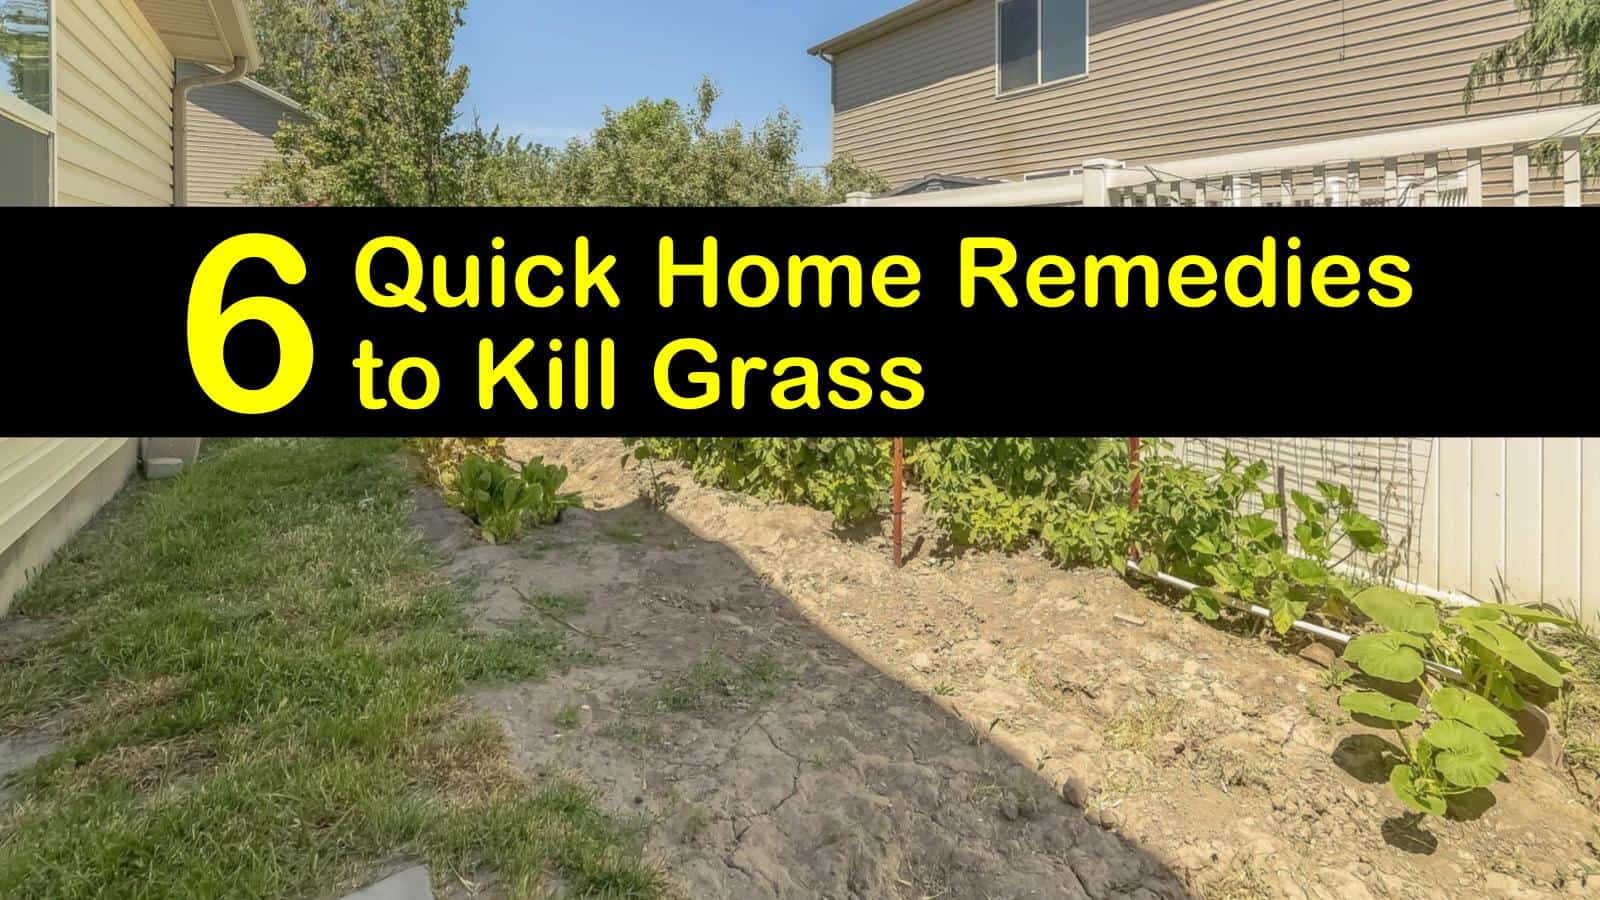 home remedies to kill grass titleimg1